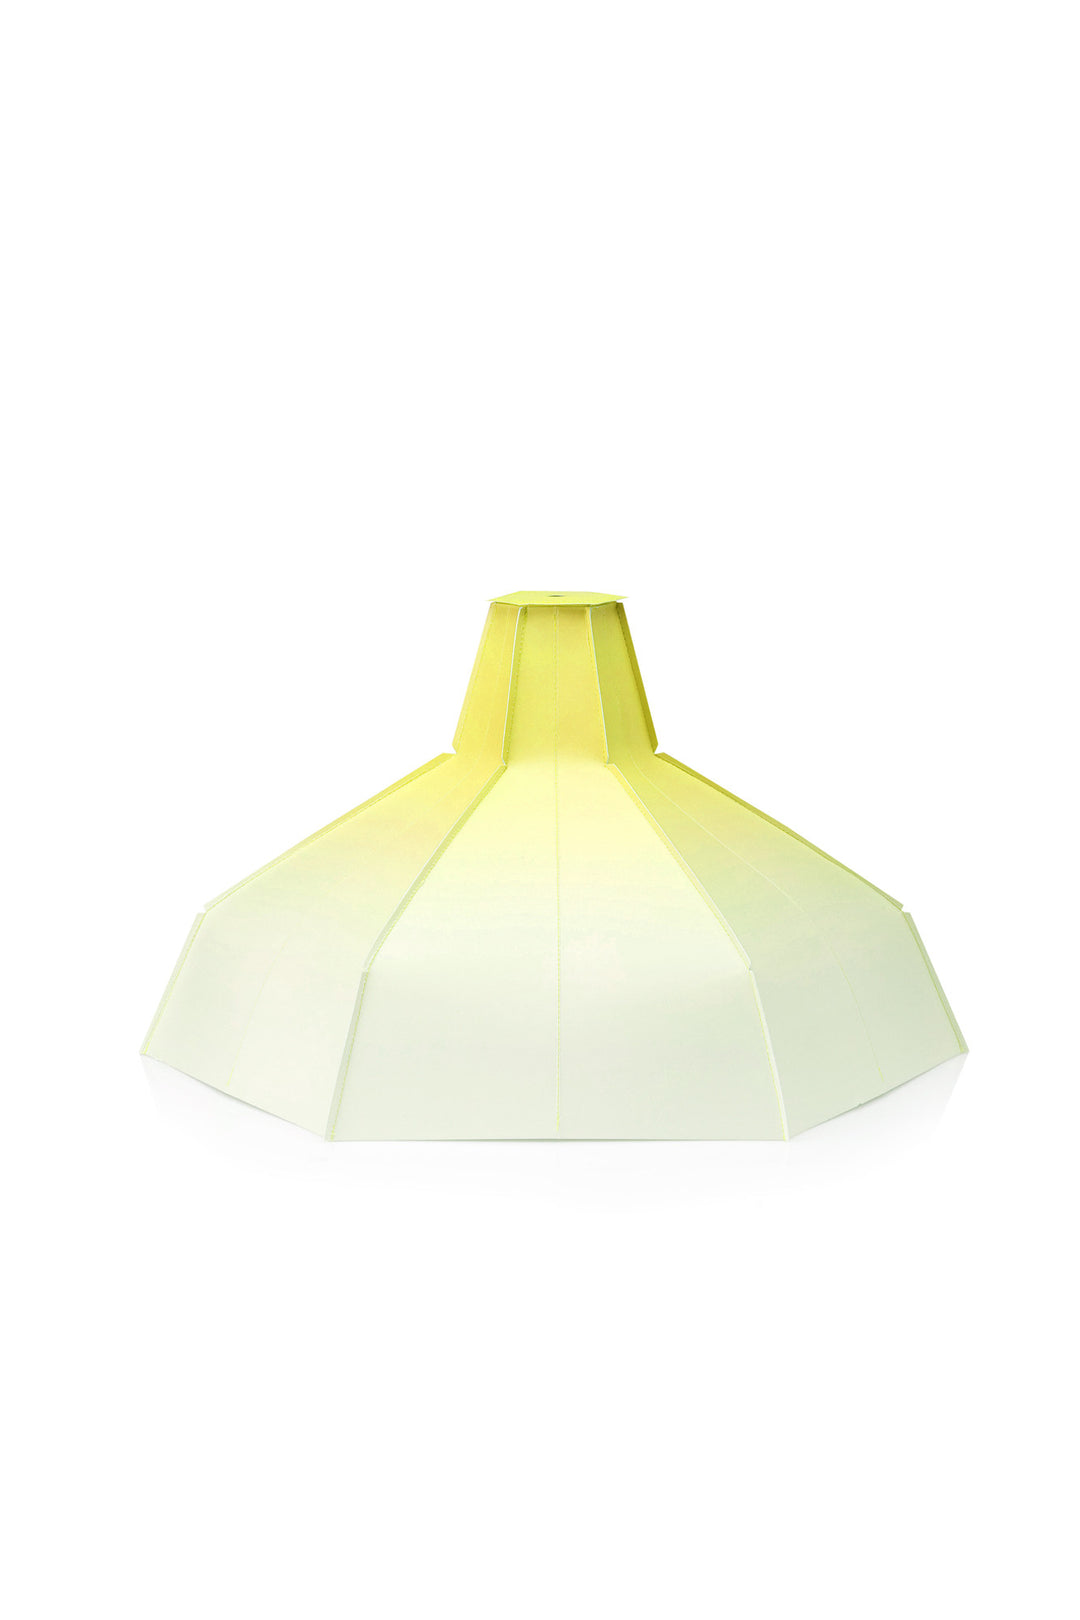 Pastel Yellow Lampshade, Lighting, Tiny Miracles - 3LittlePicks